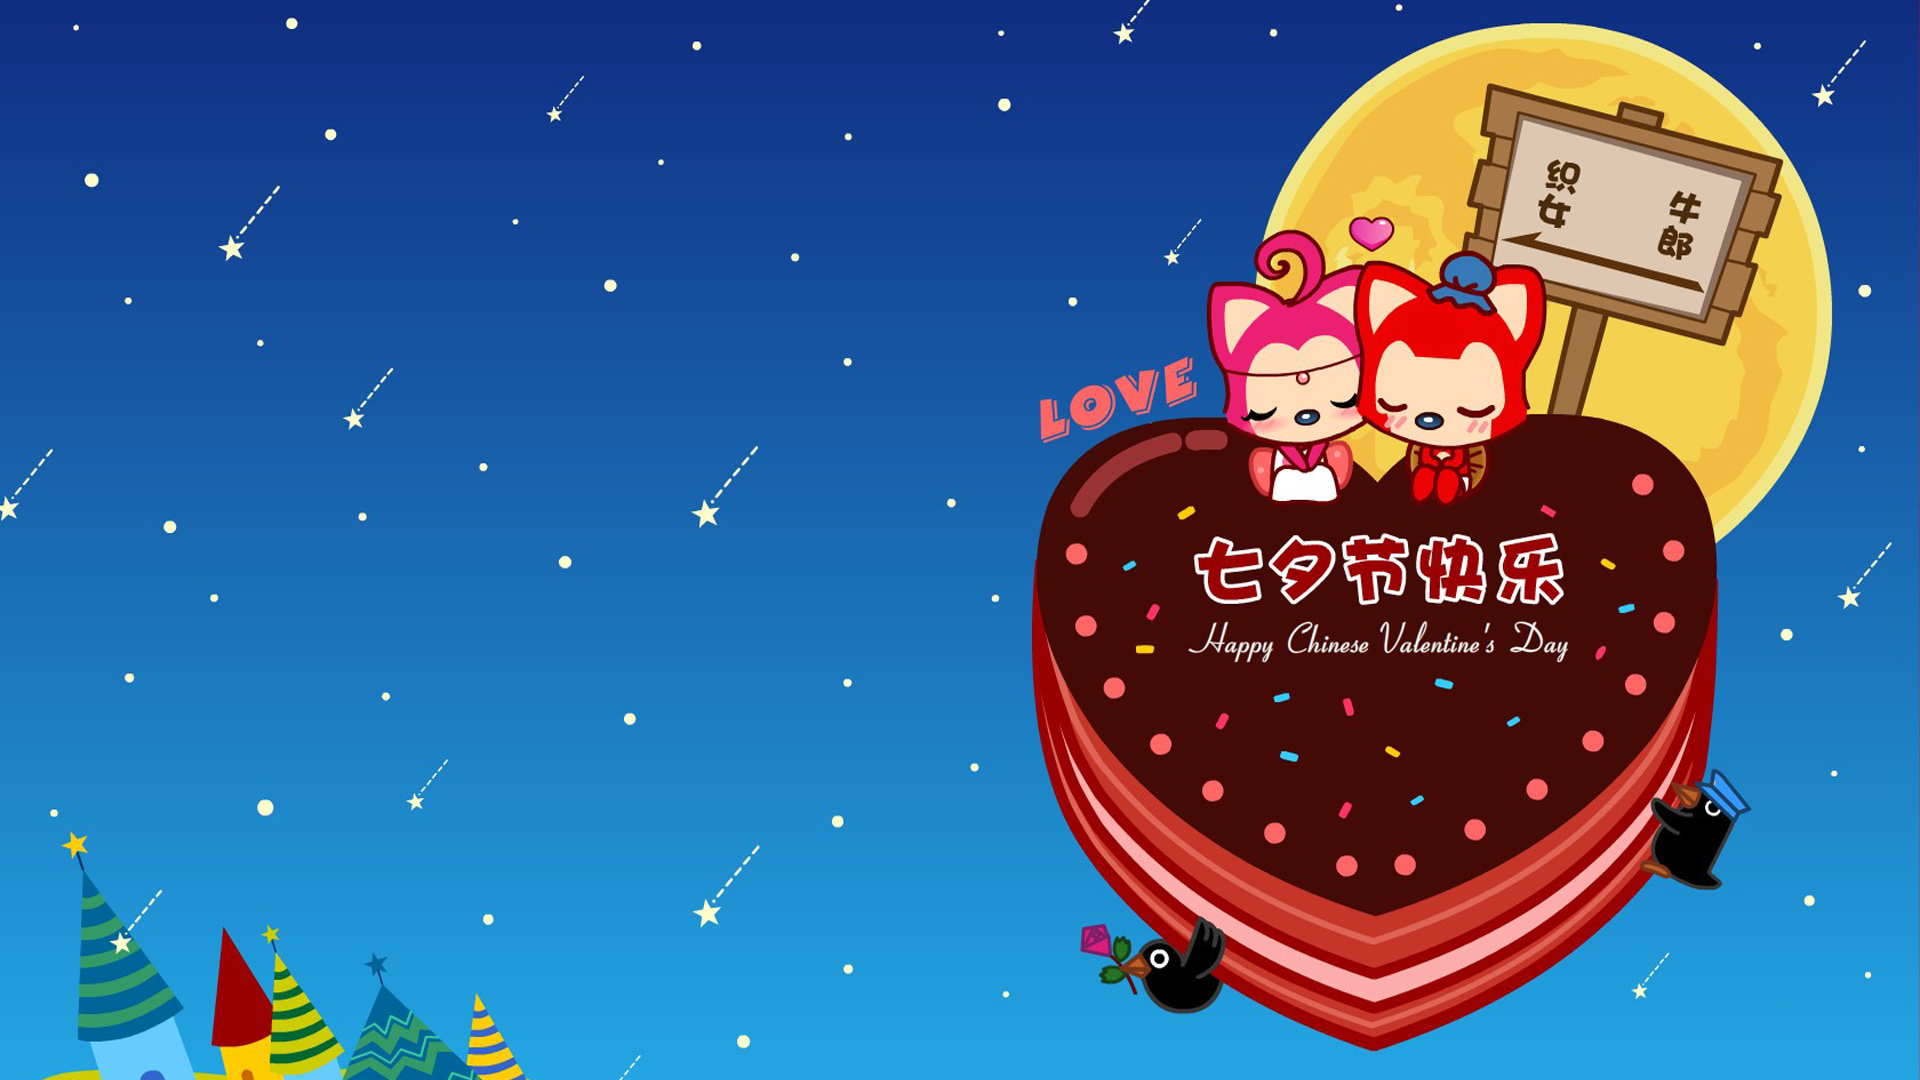 Happy Chinese Valentine's Day Wallpaper